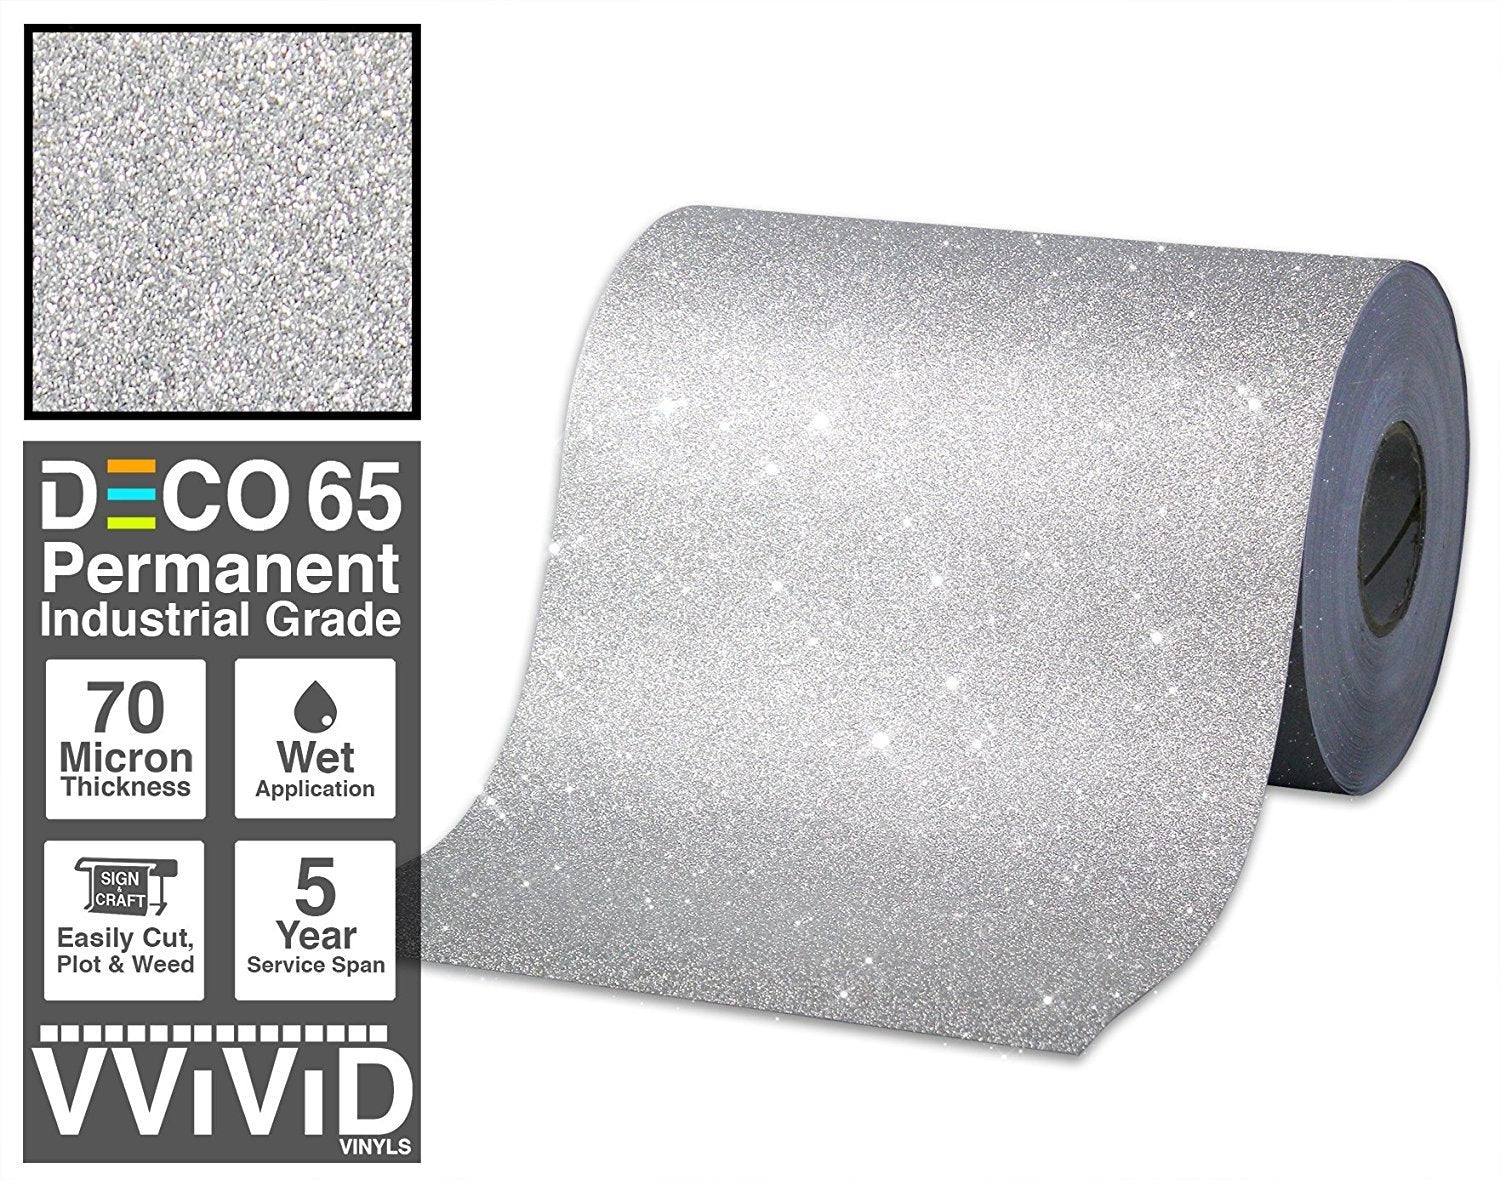 Deco65 Silver Glitter Craft Vinyl - The VViViD Vinyl Wrap Shop